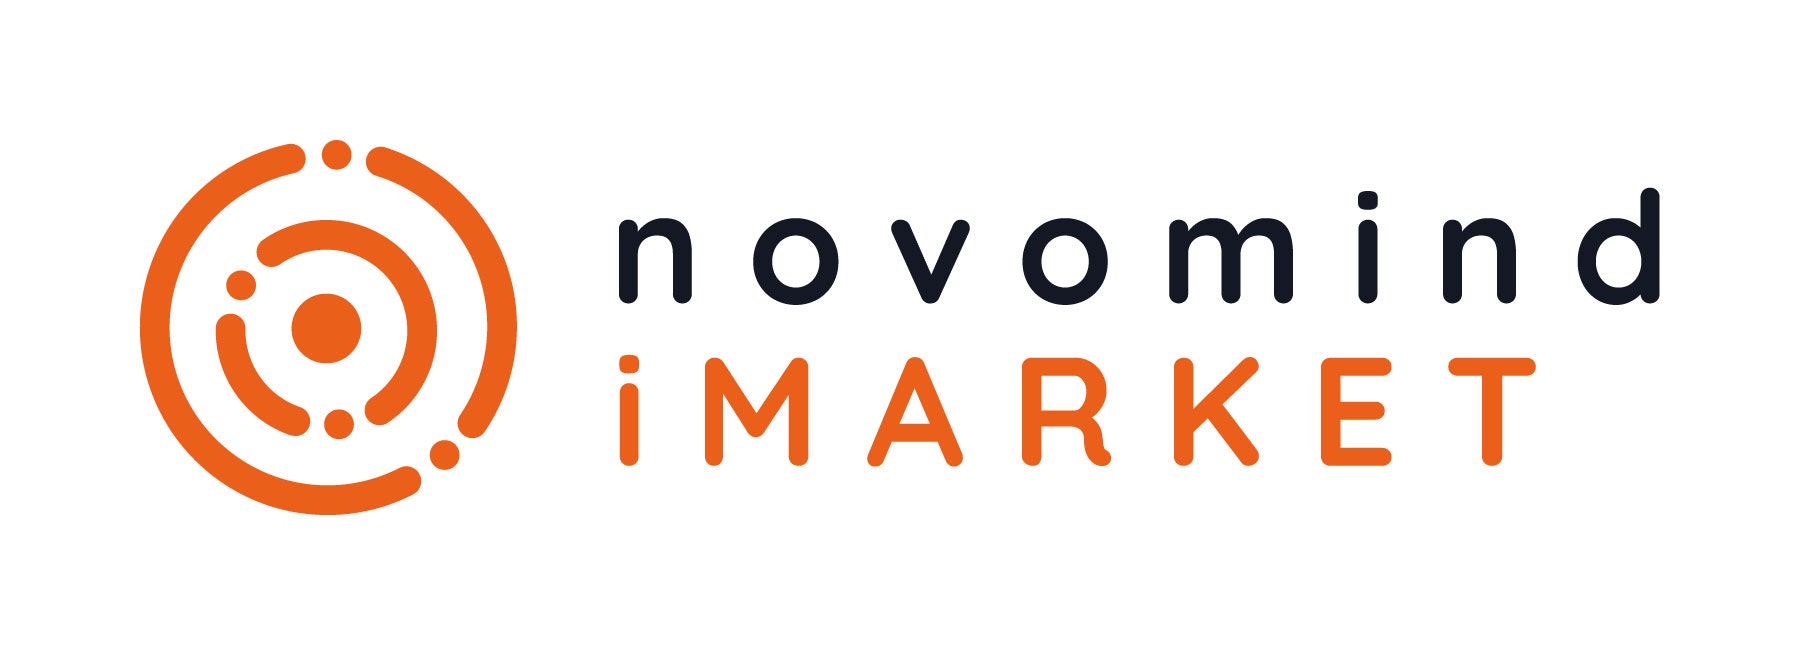 novomind iMARKET Logo